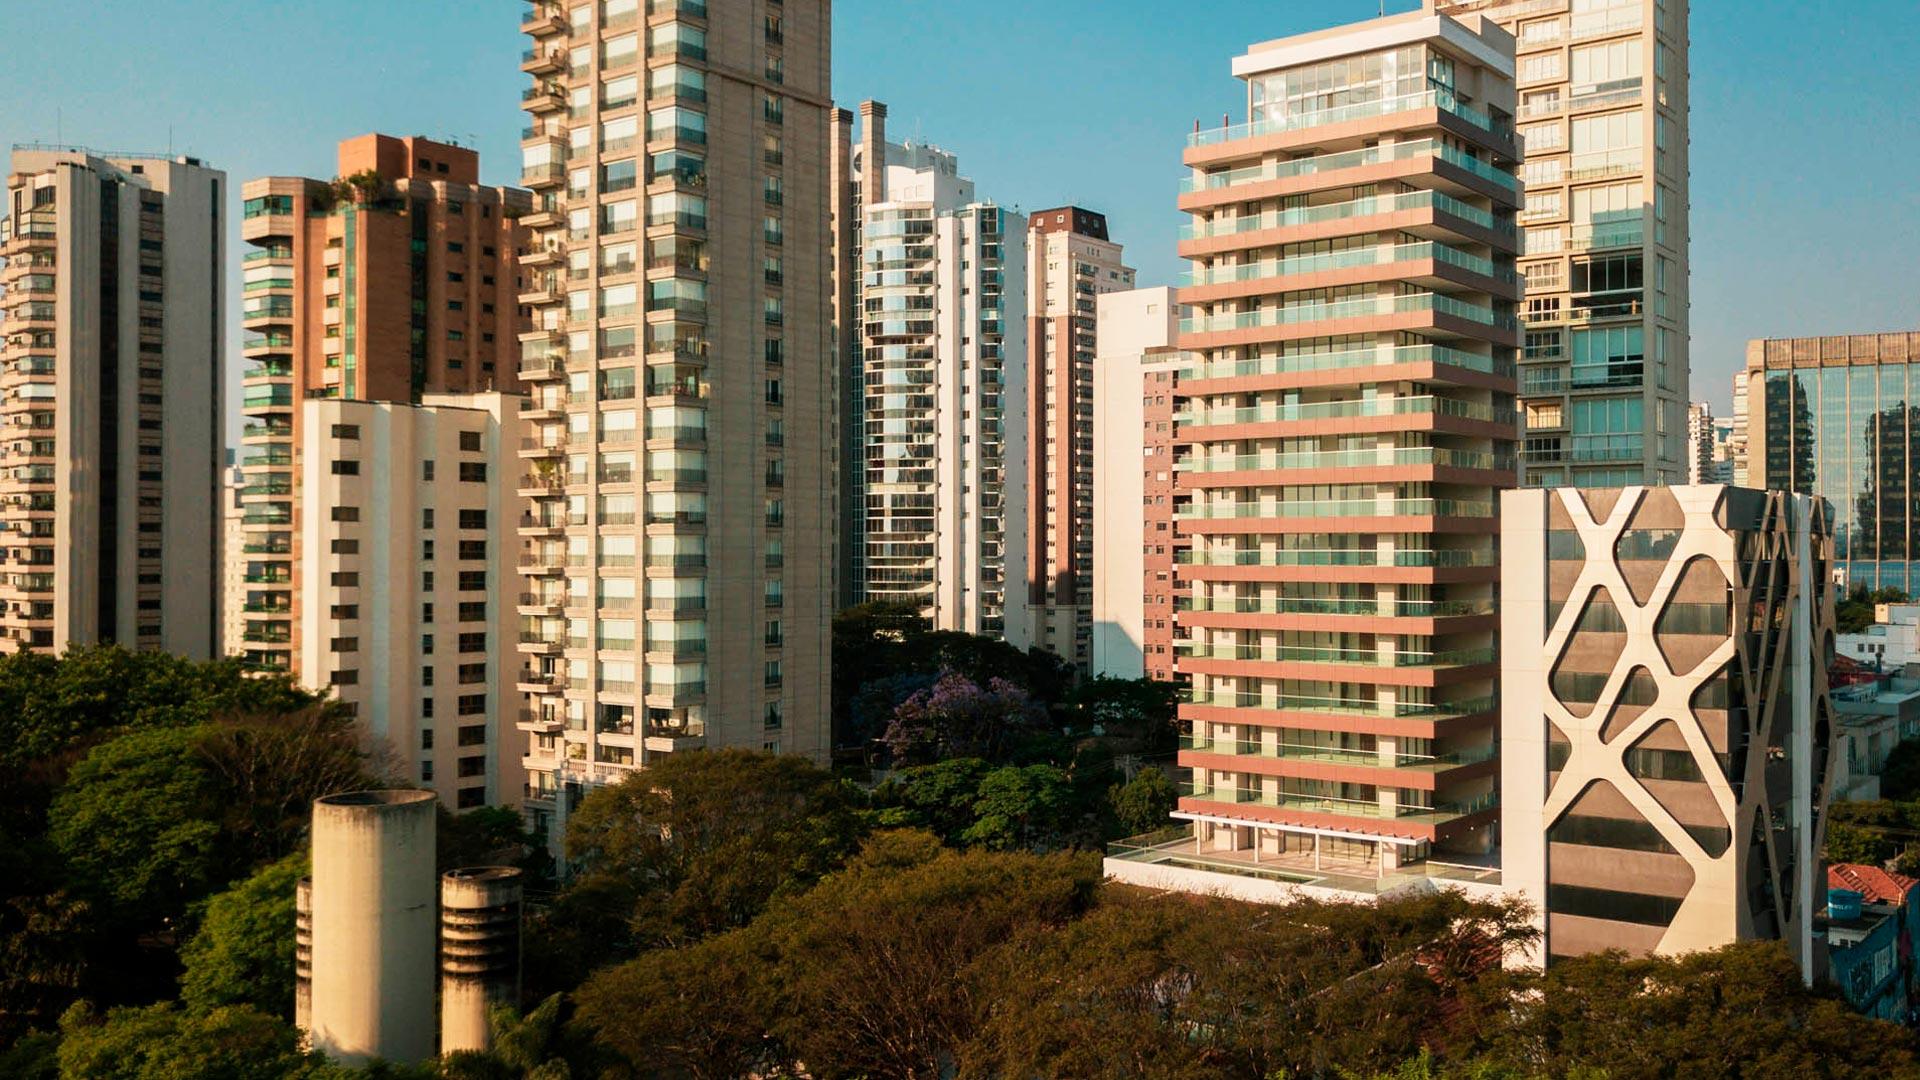 Empreendimento: Curitiba 381, endereço: Rua Curitiba, 381, Ibirapuera, São Paulo